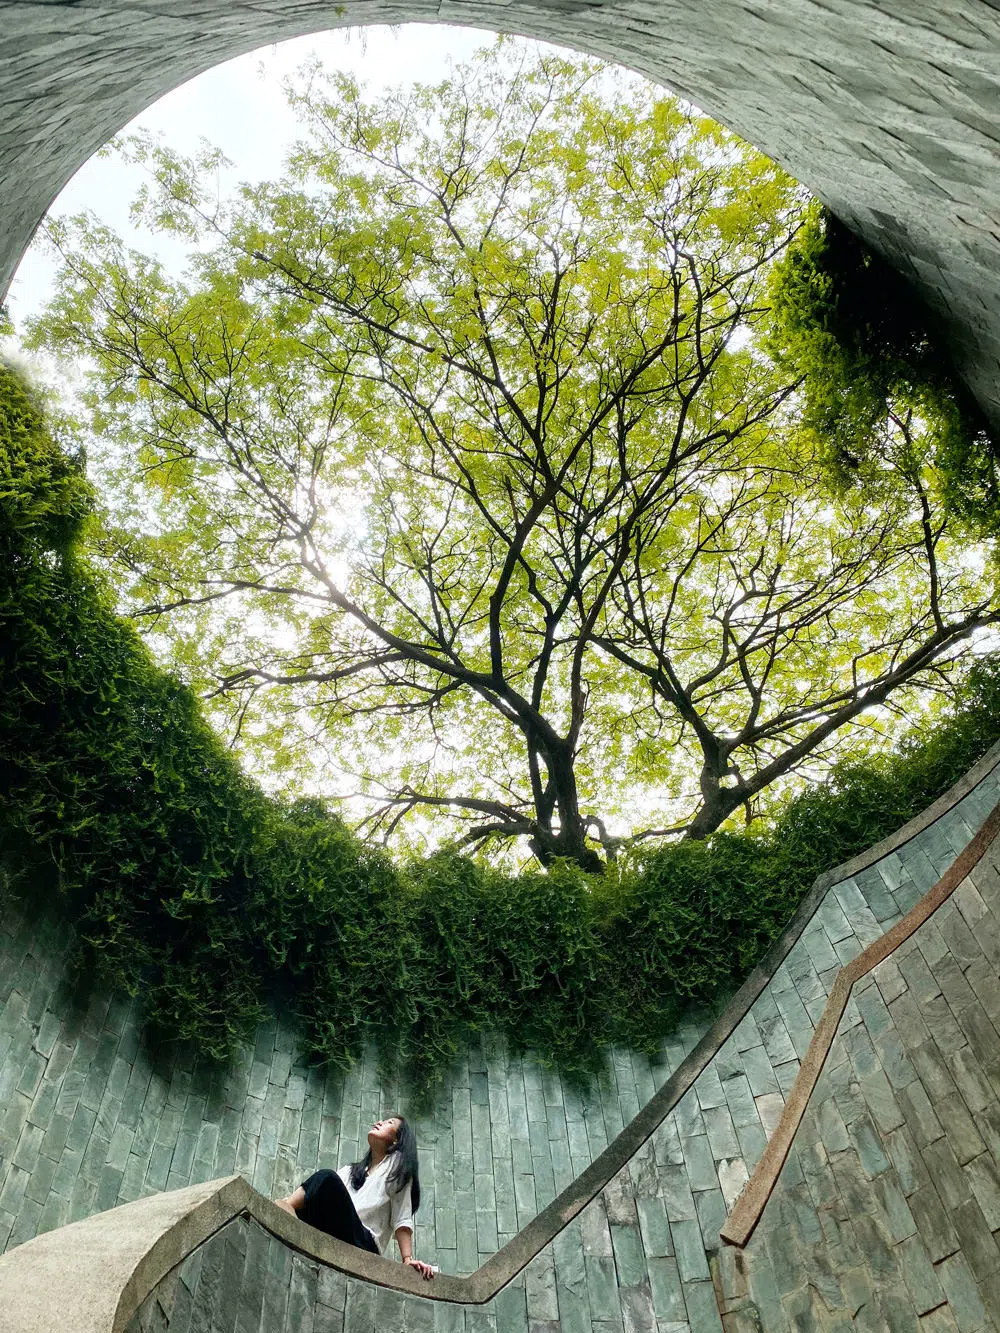 Tree Tunnel at Fort Canning Park. Photo: Kelvin Han / Unsplash